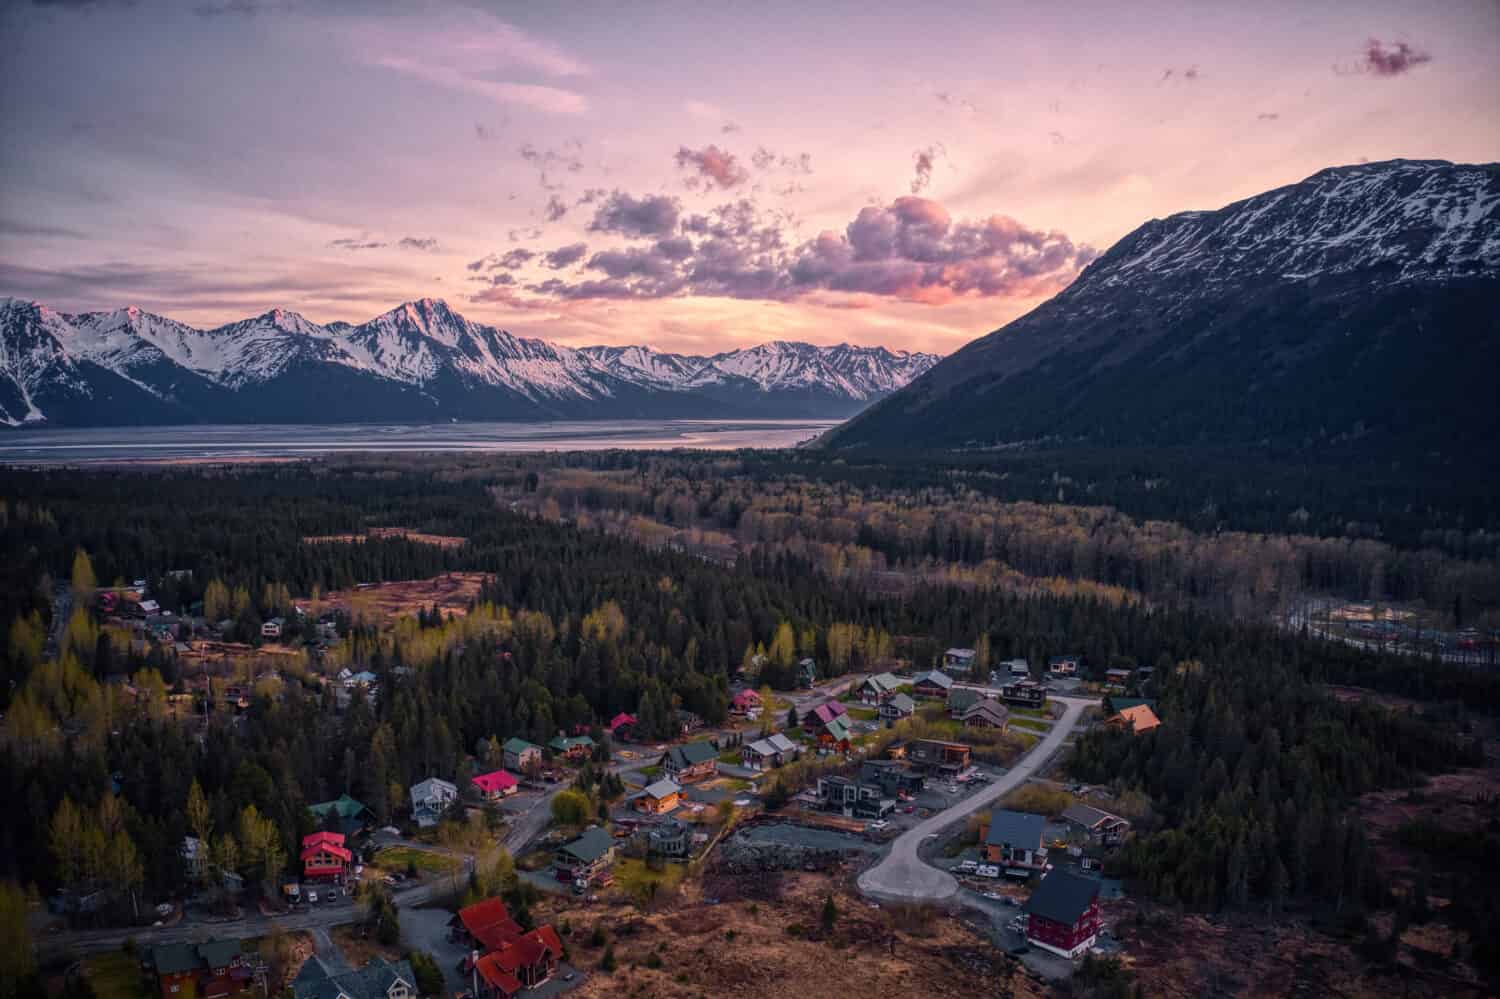 Aerial View of the Resort Town of Girdwood, Alaska at Sunset